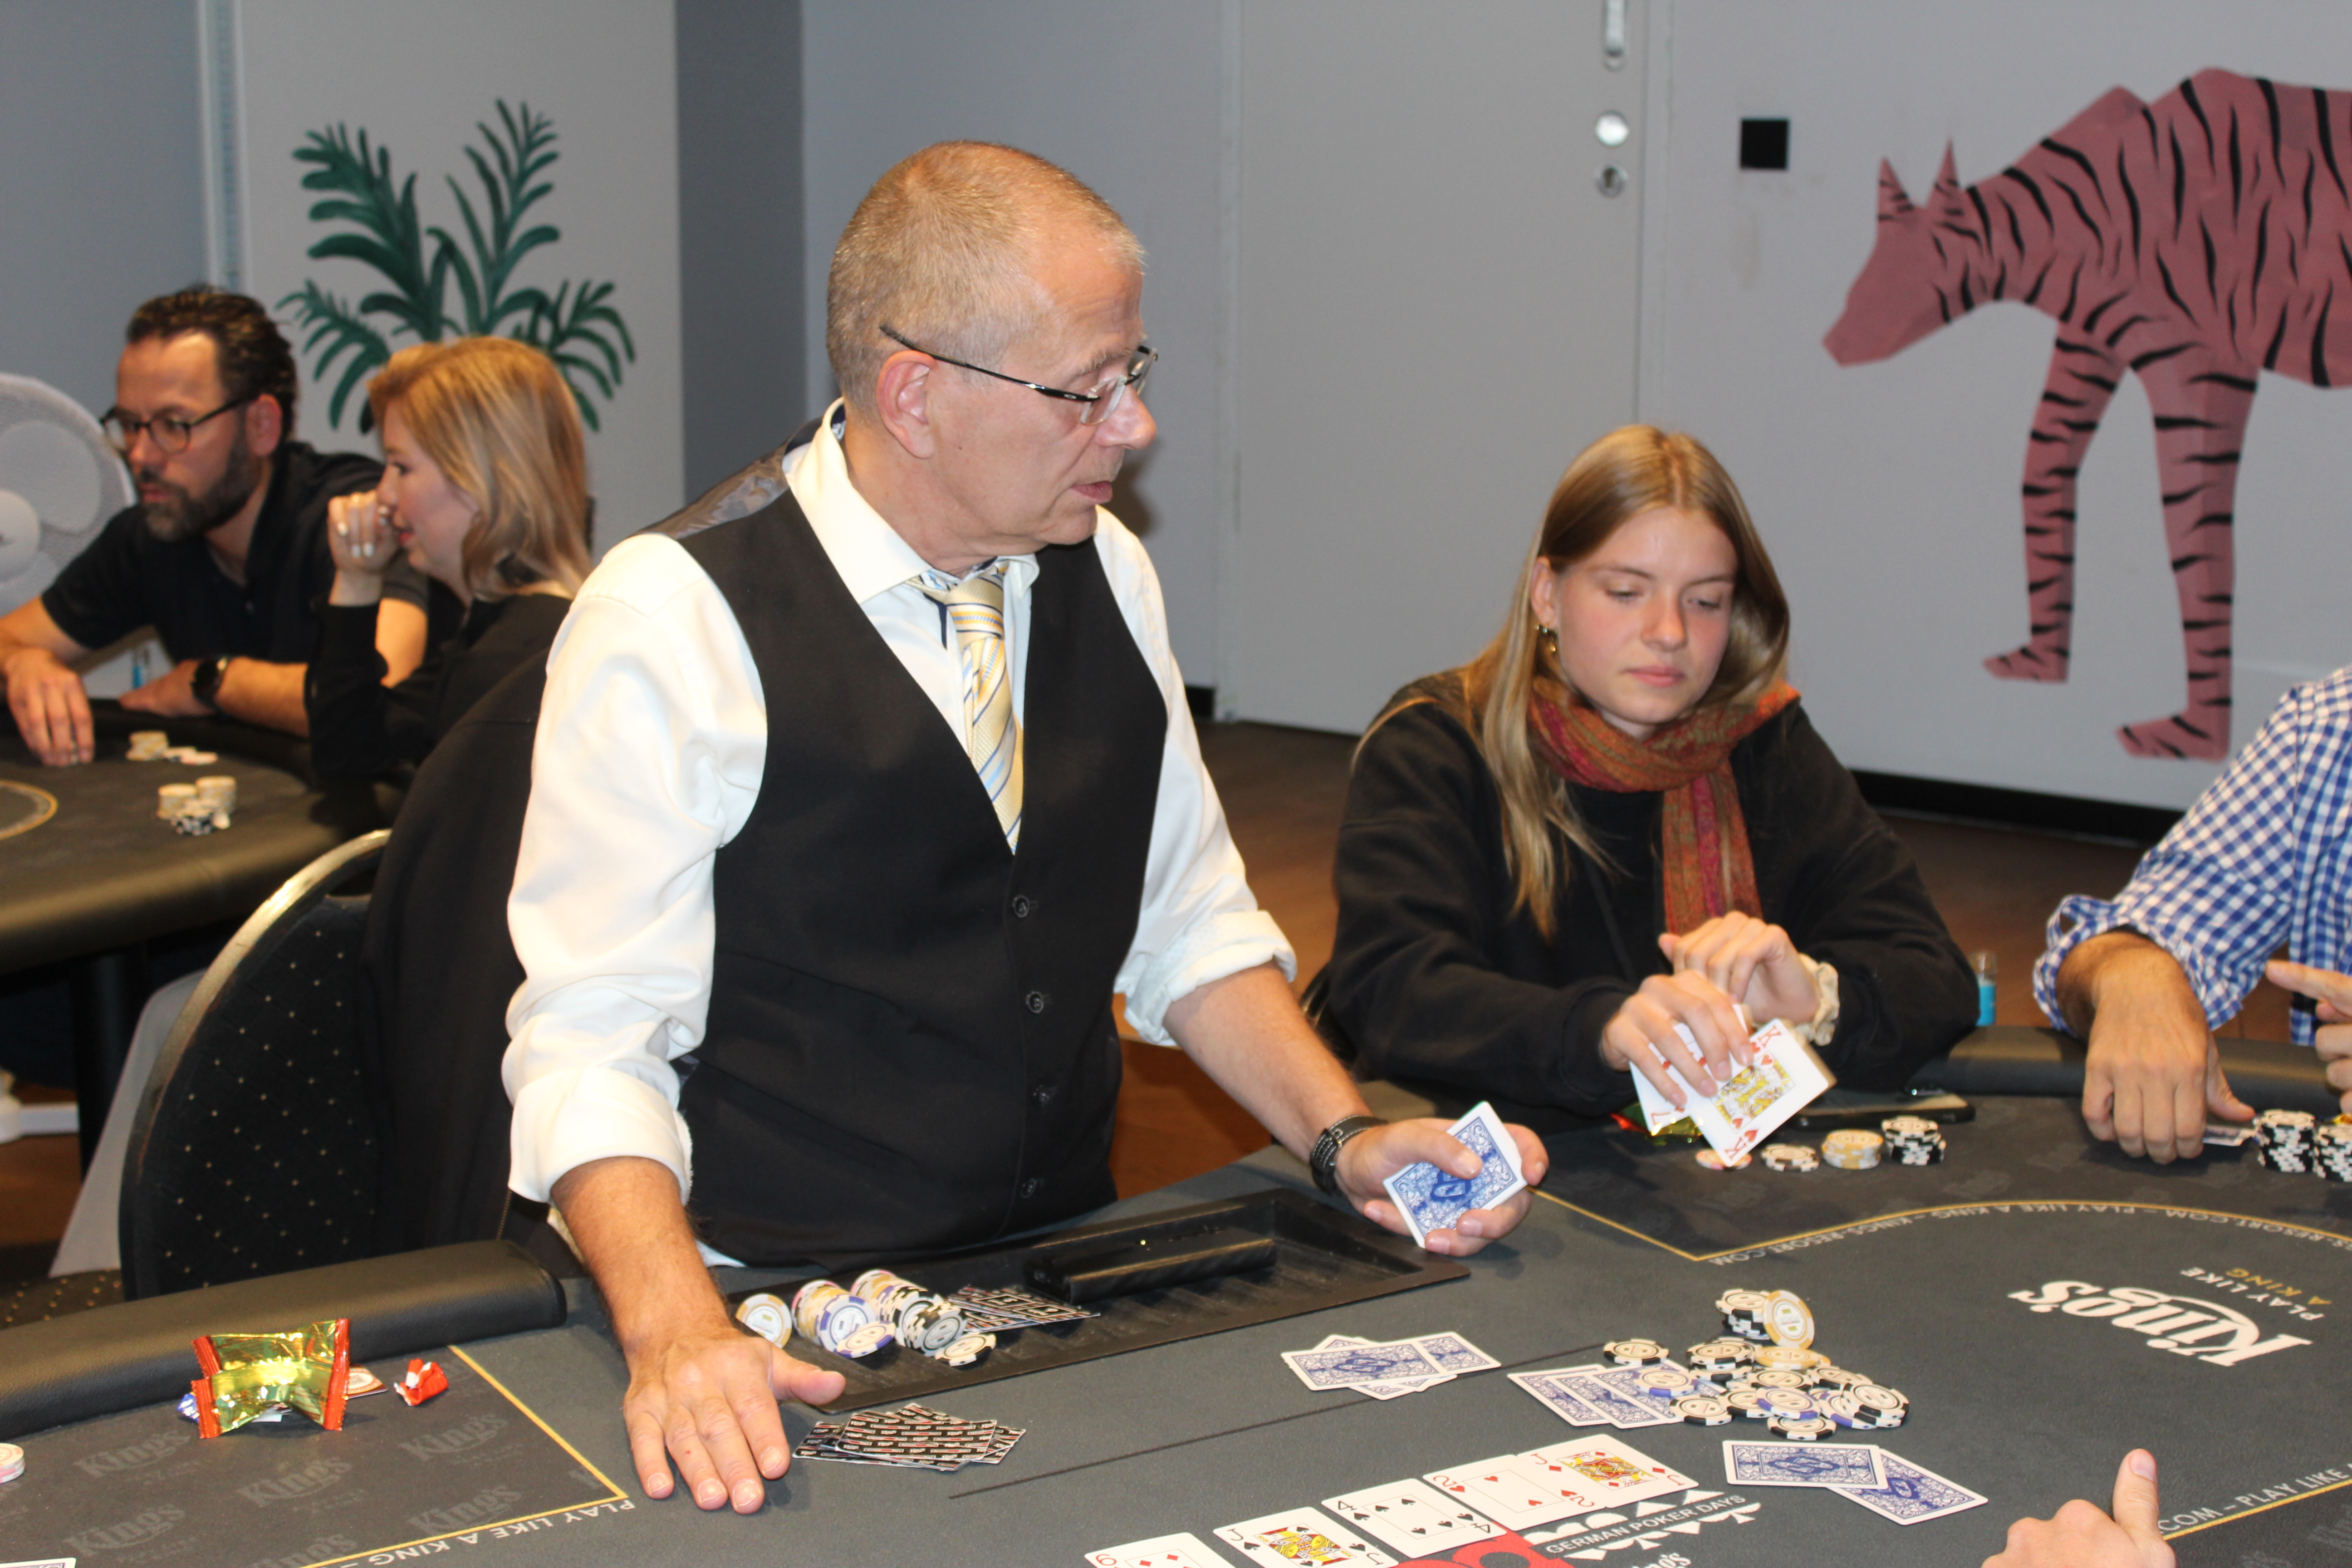 Dealer, Pokertisch, Personen